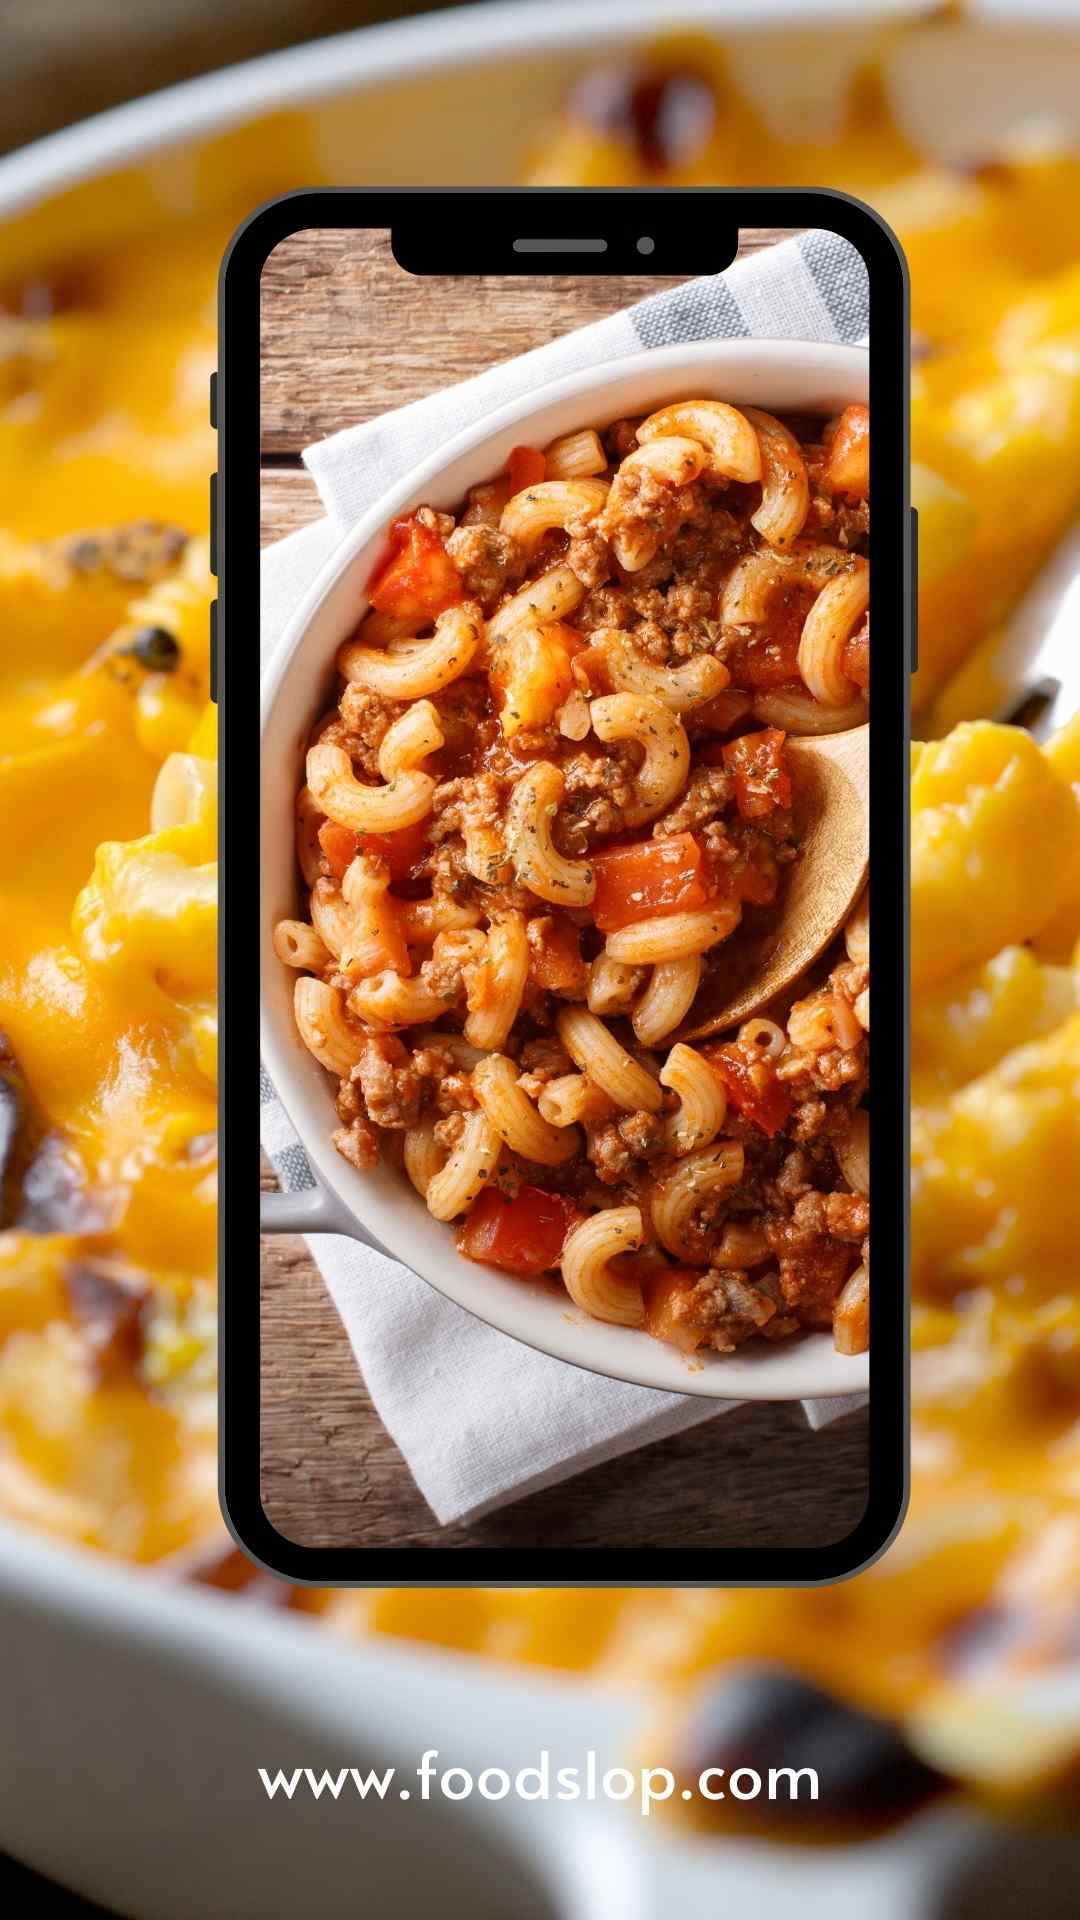 Why Am I Craving Macaroni?